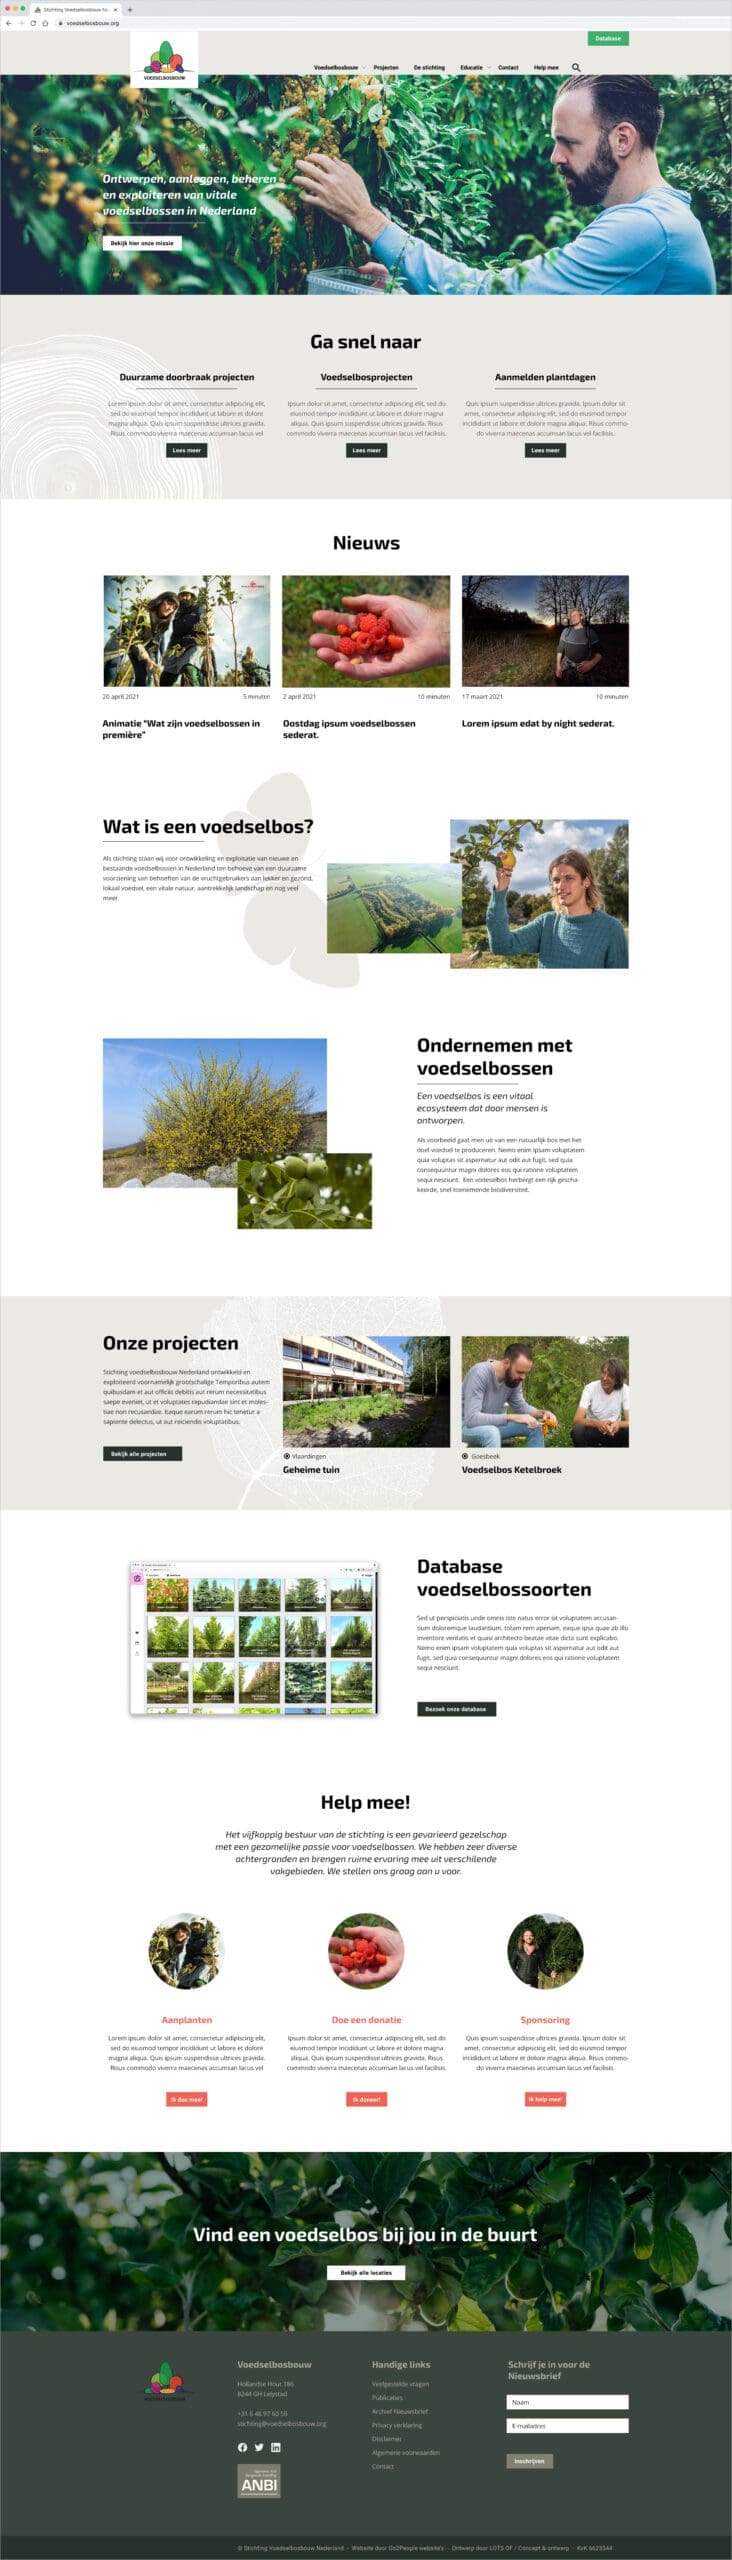 Ontwerp homepage Stichting Voedselbosbouw